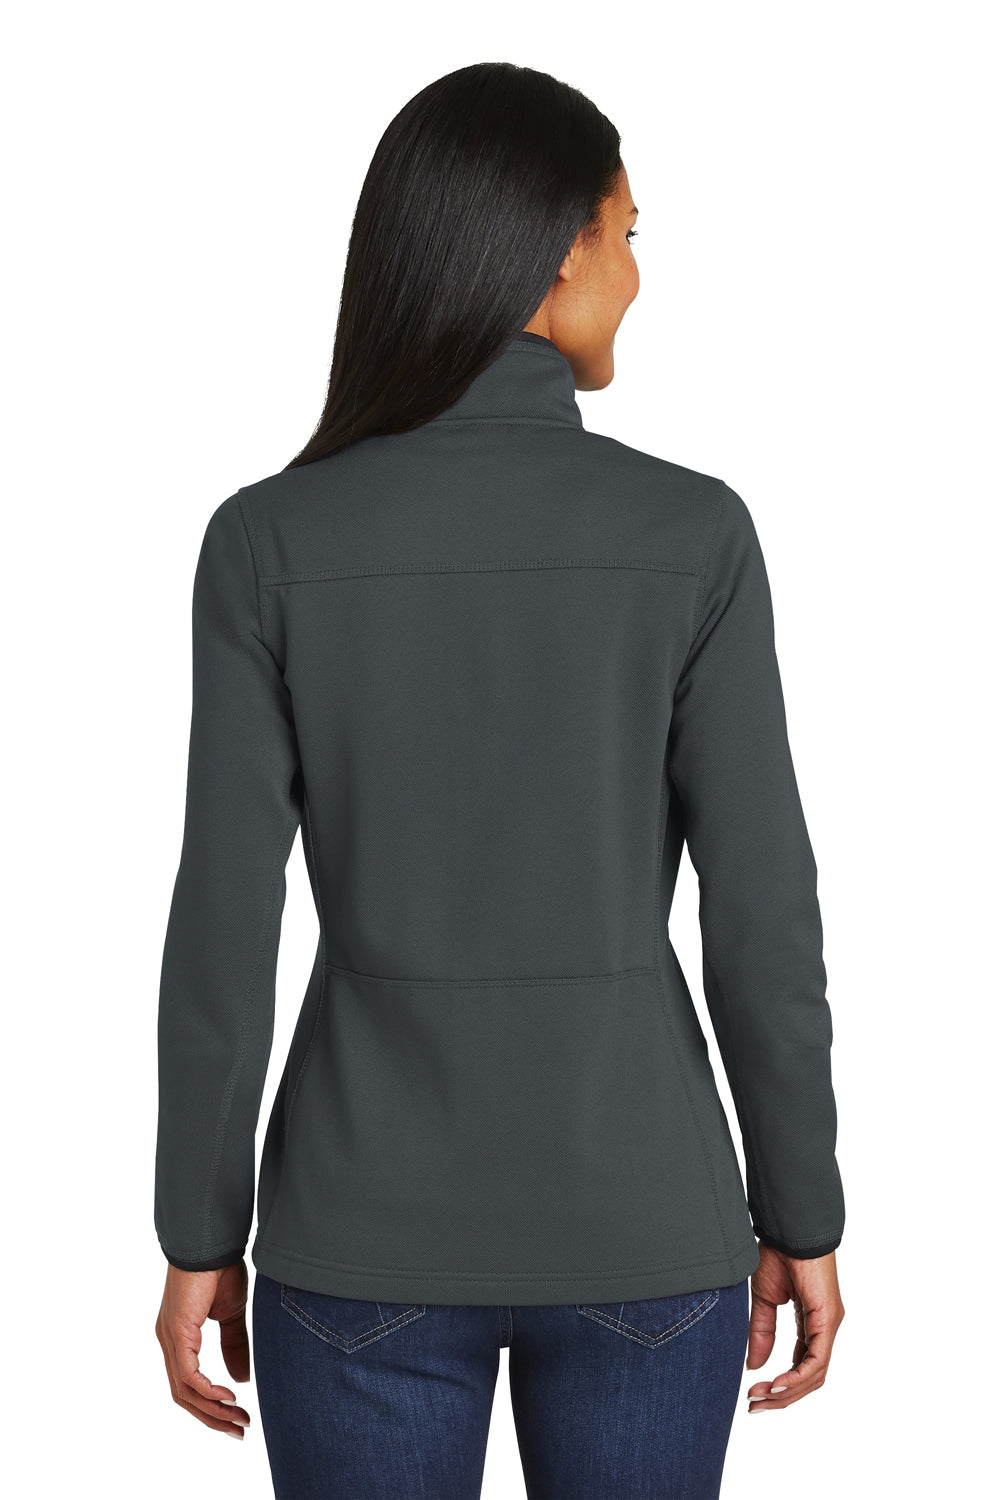 Port Authority L222 Womens Full Zip Fleece Jacket Graphite Grey Back